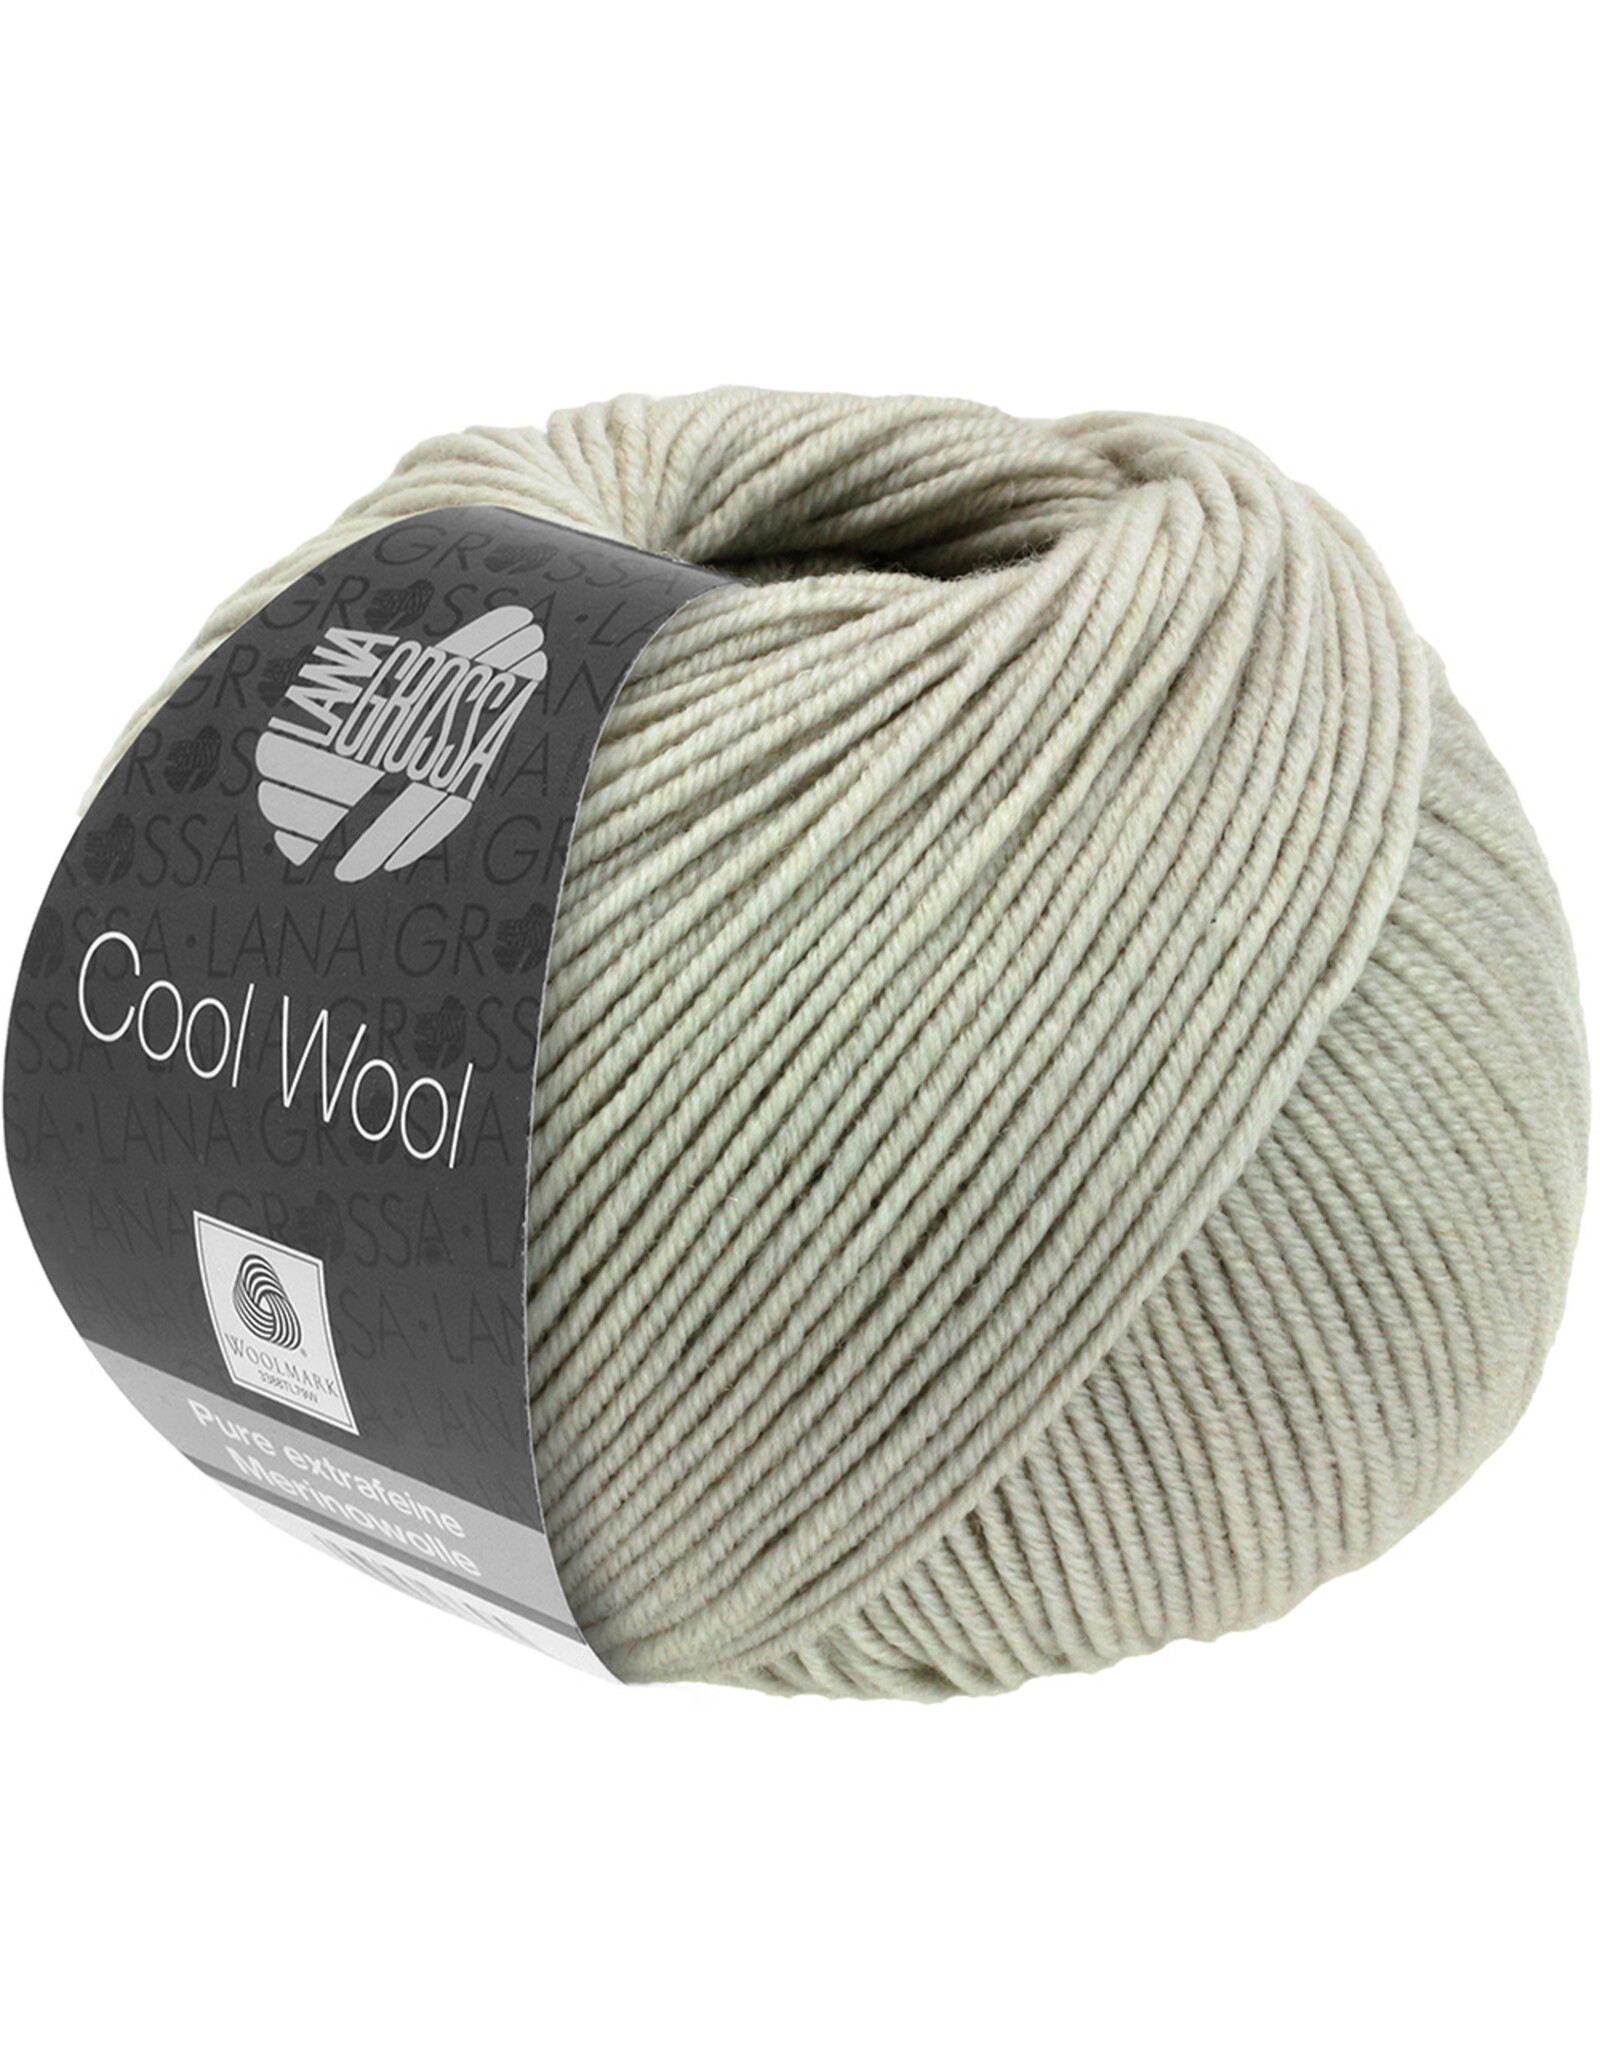 Lana Grossa Lana Grossa Cool wool 2106